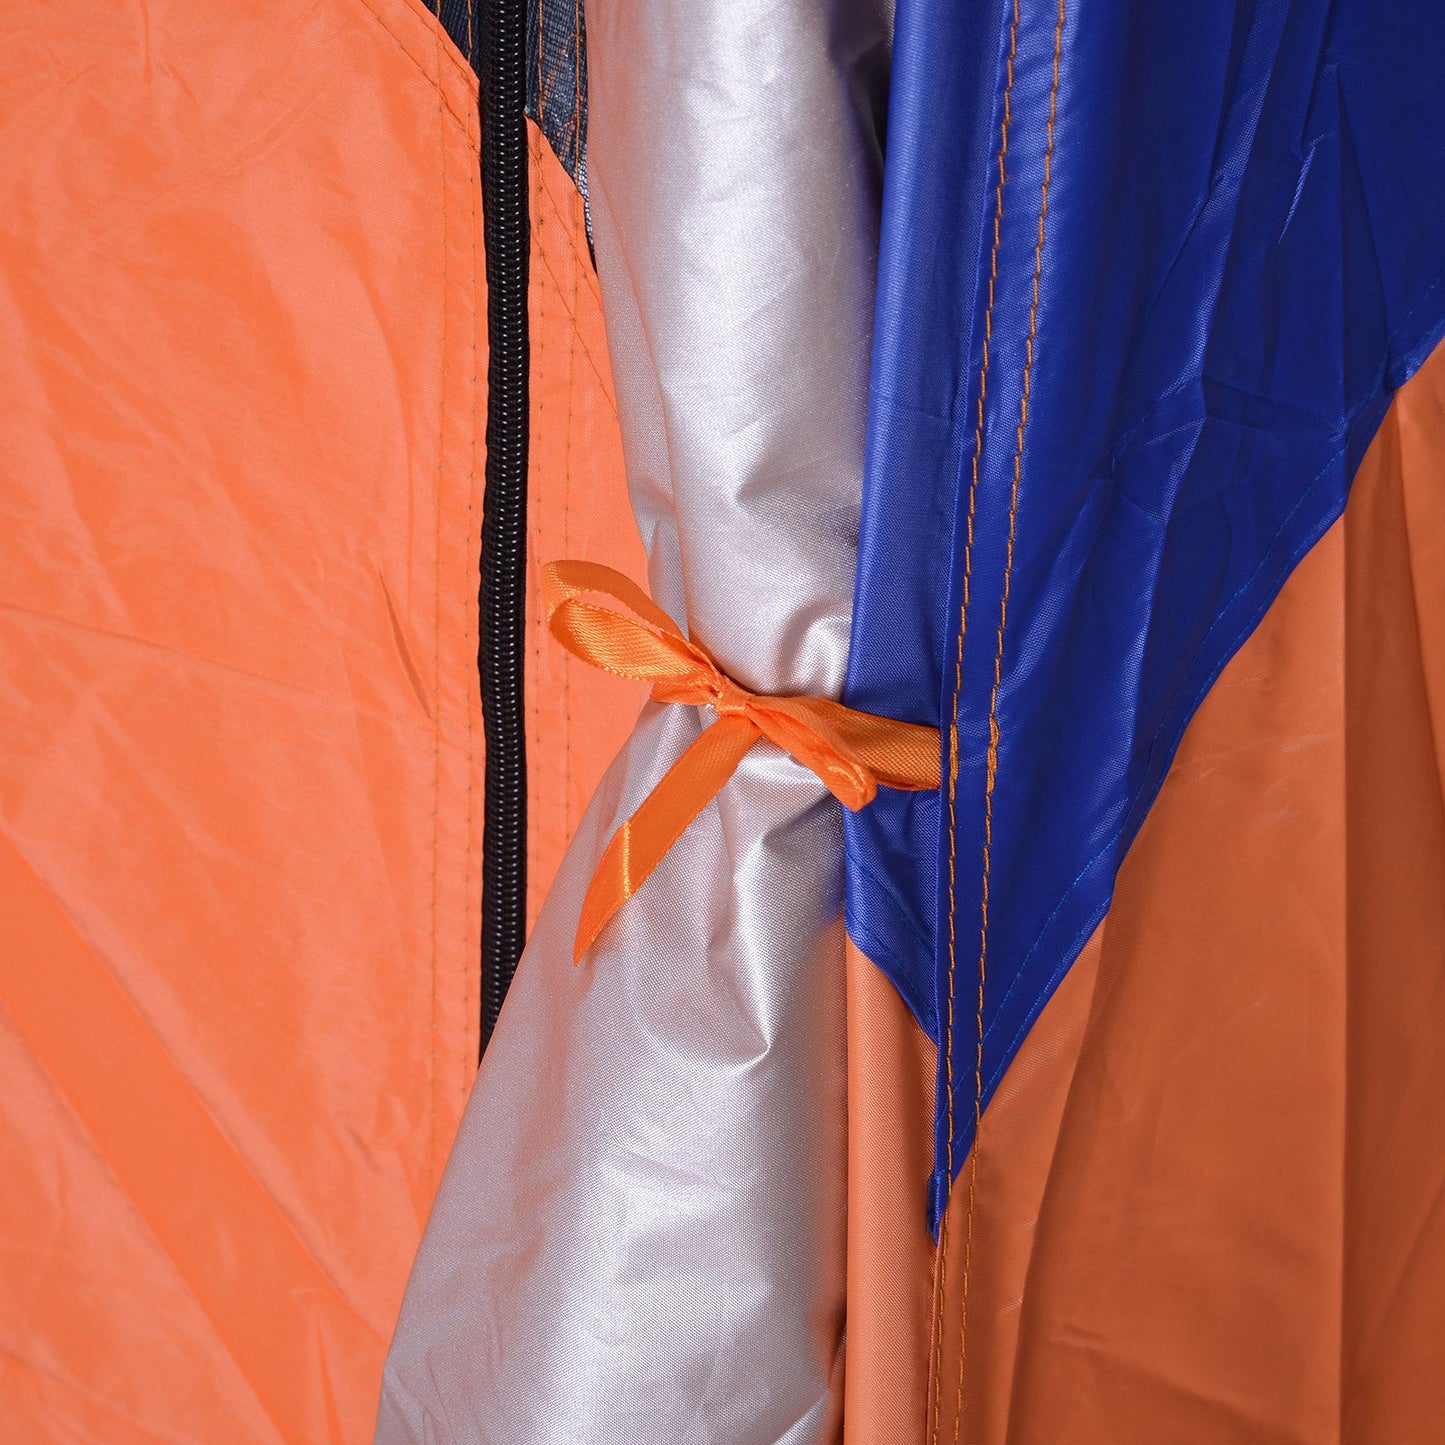 Nancy's Arisaig Kampeertent - Camping tent - Oranje/Blauw - 275 x 275 x 170 cm